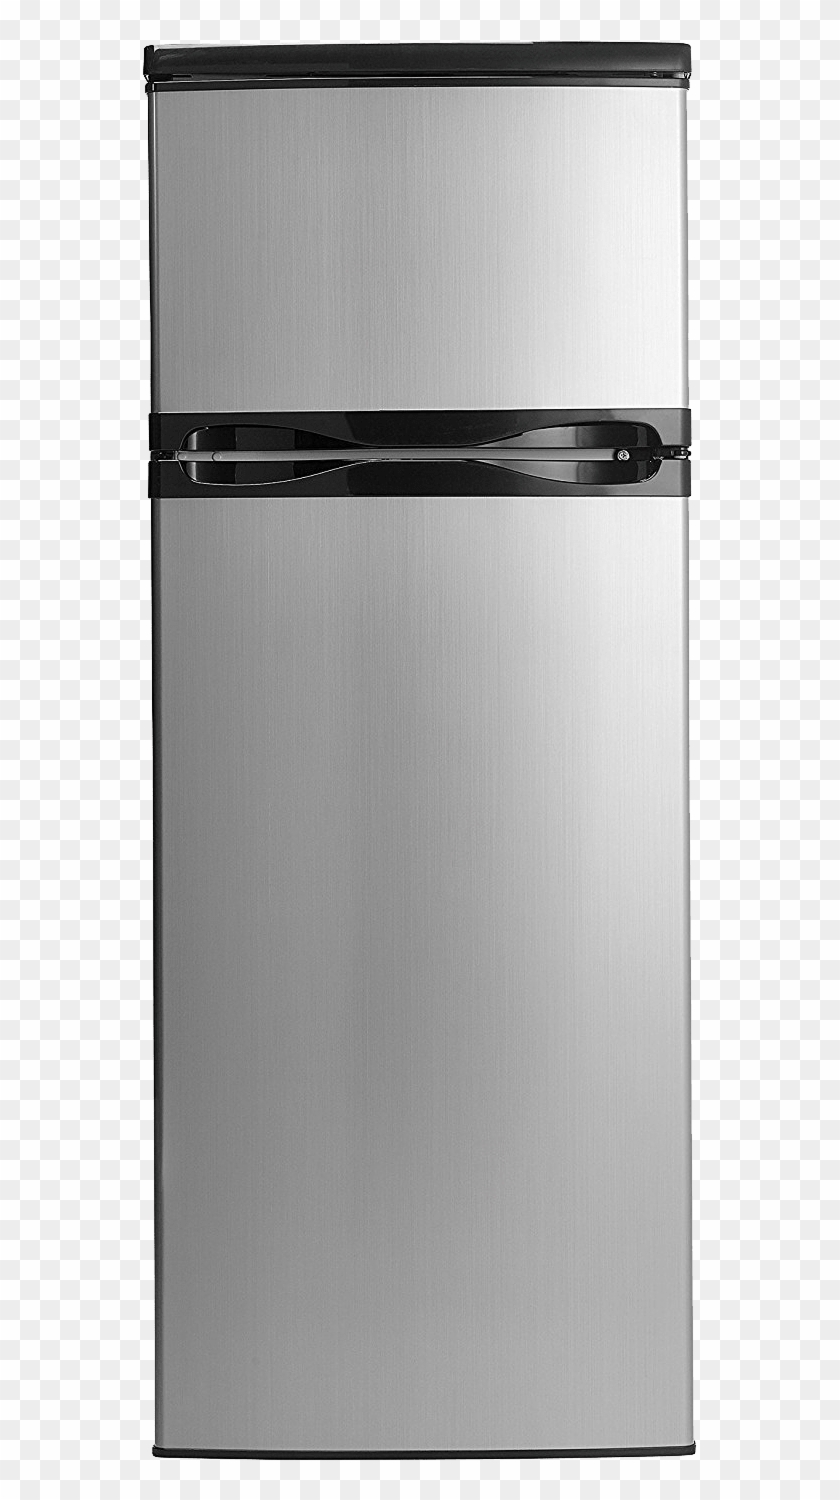 Fridge - Apartment Size Refrigerator Clipart #5055586